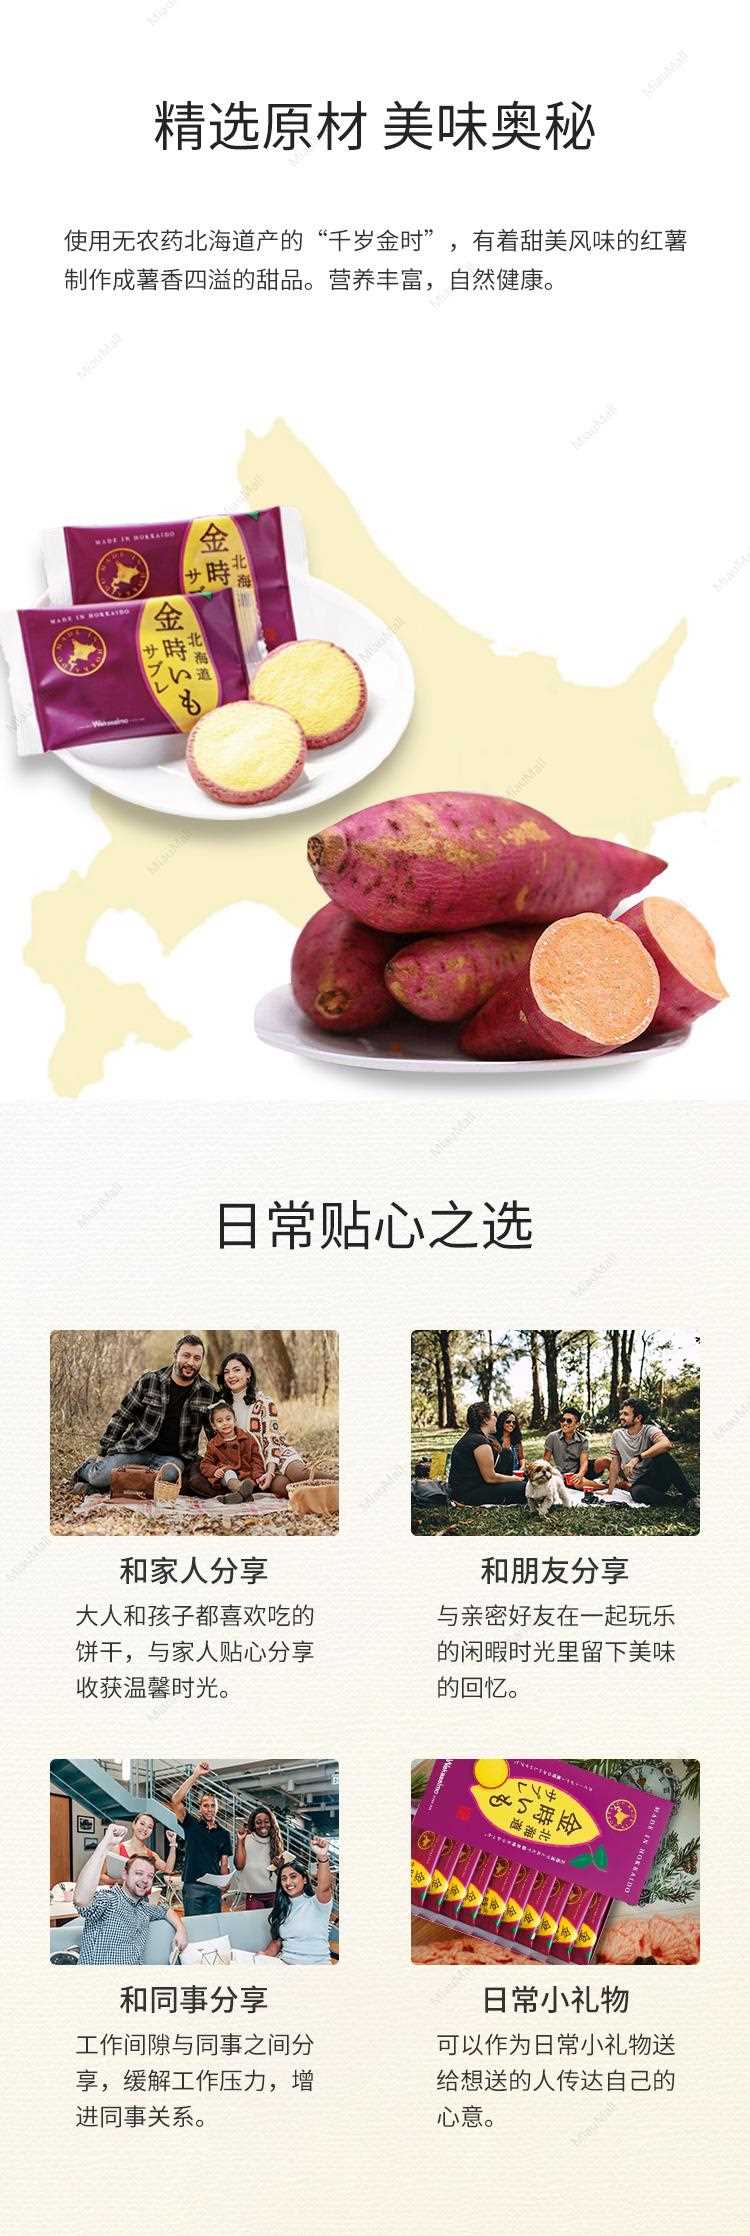 Wakasaimo-北海道土特产红薯烤糖饼干_02.jpg